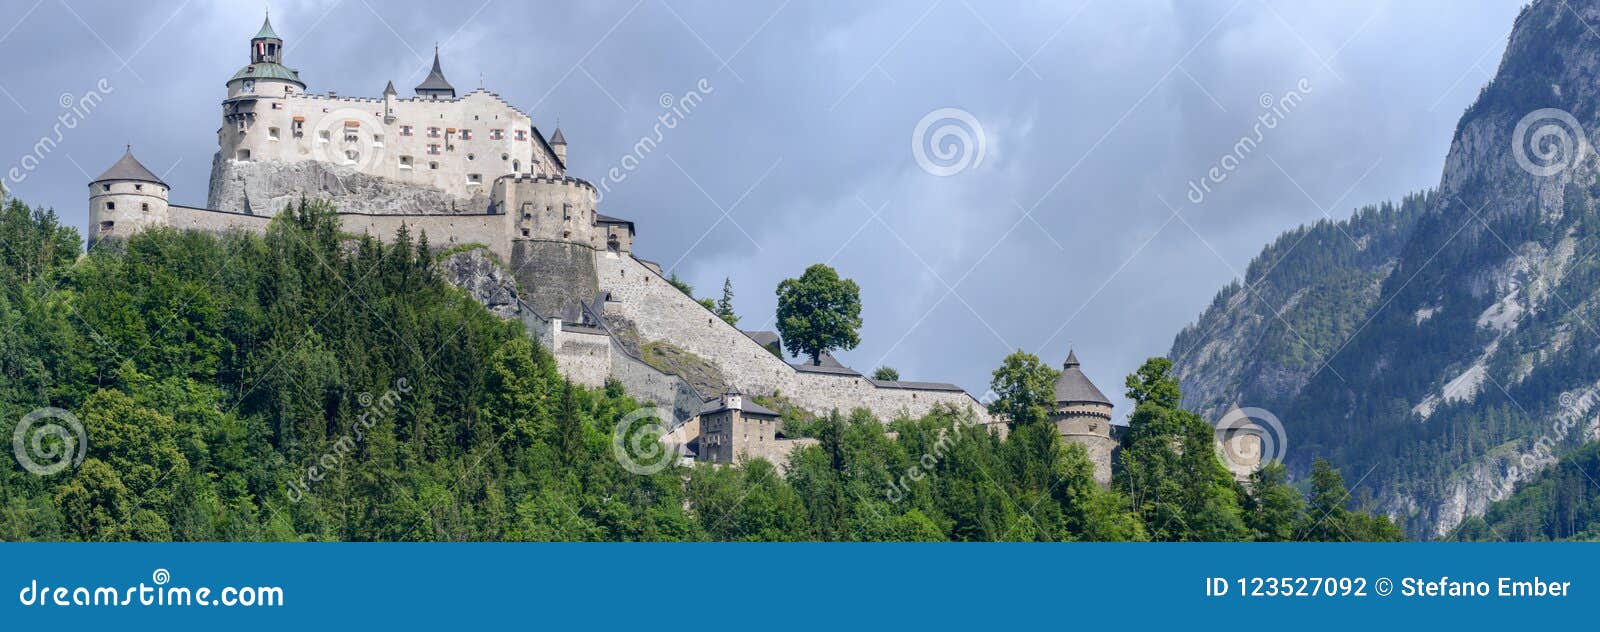 hohenwerfen castle and fortress at werfen on austria